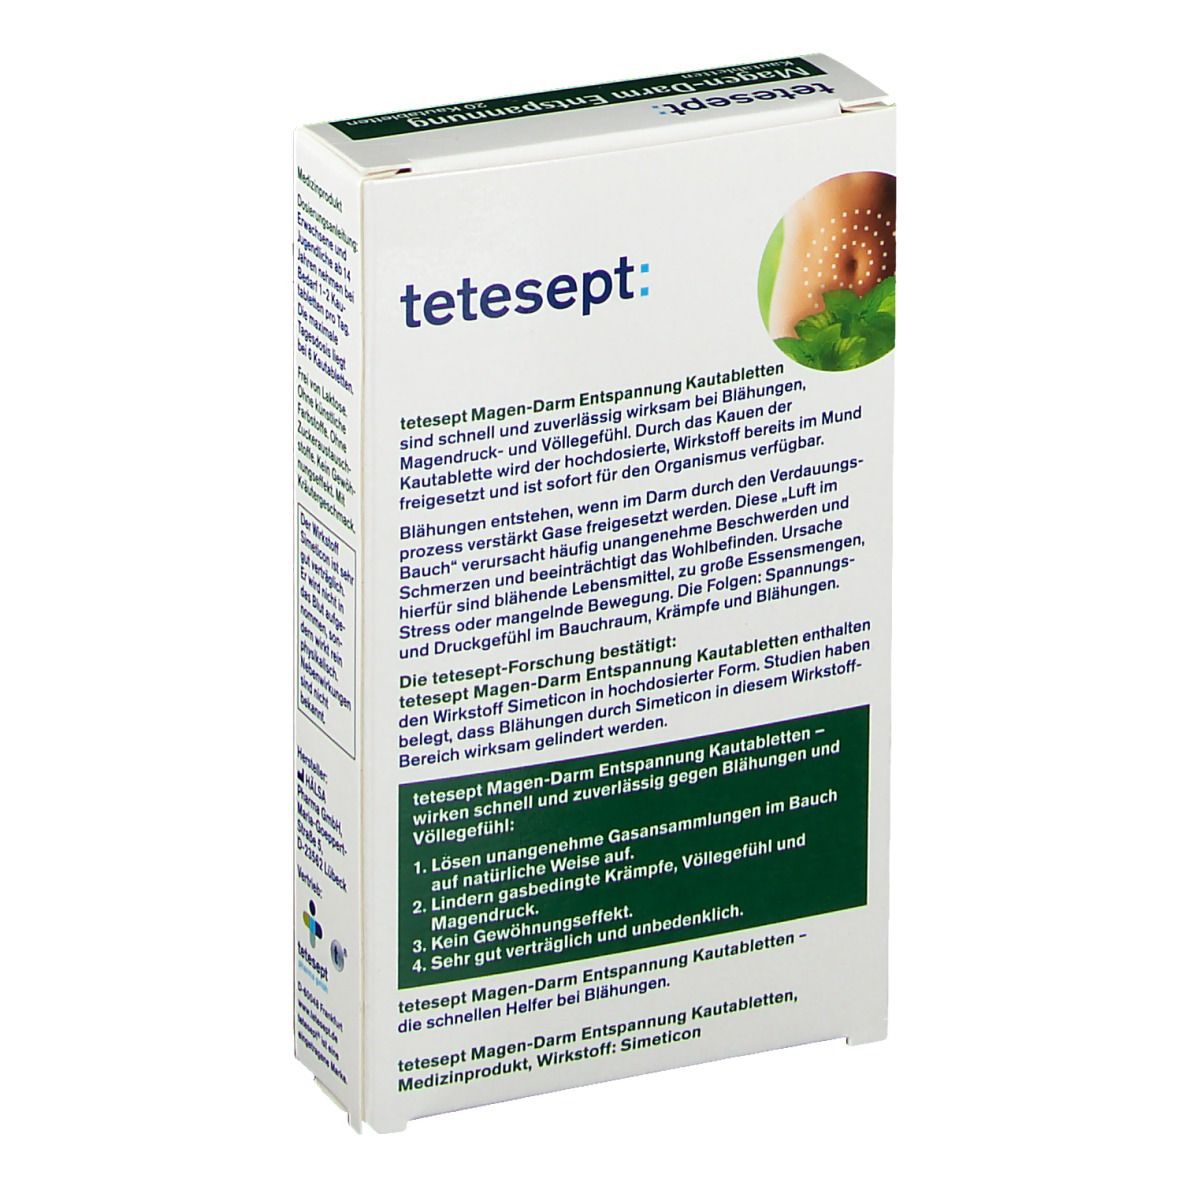 tetesept® Magen-Darm-Entspannung Kautabletten